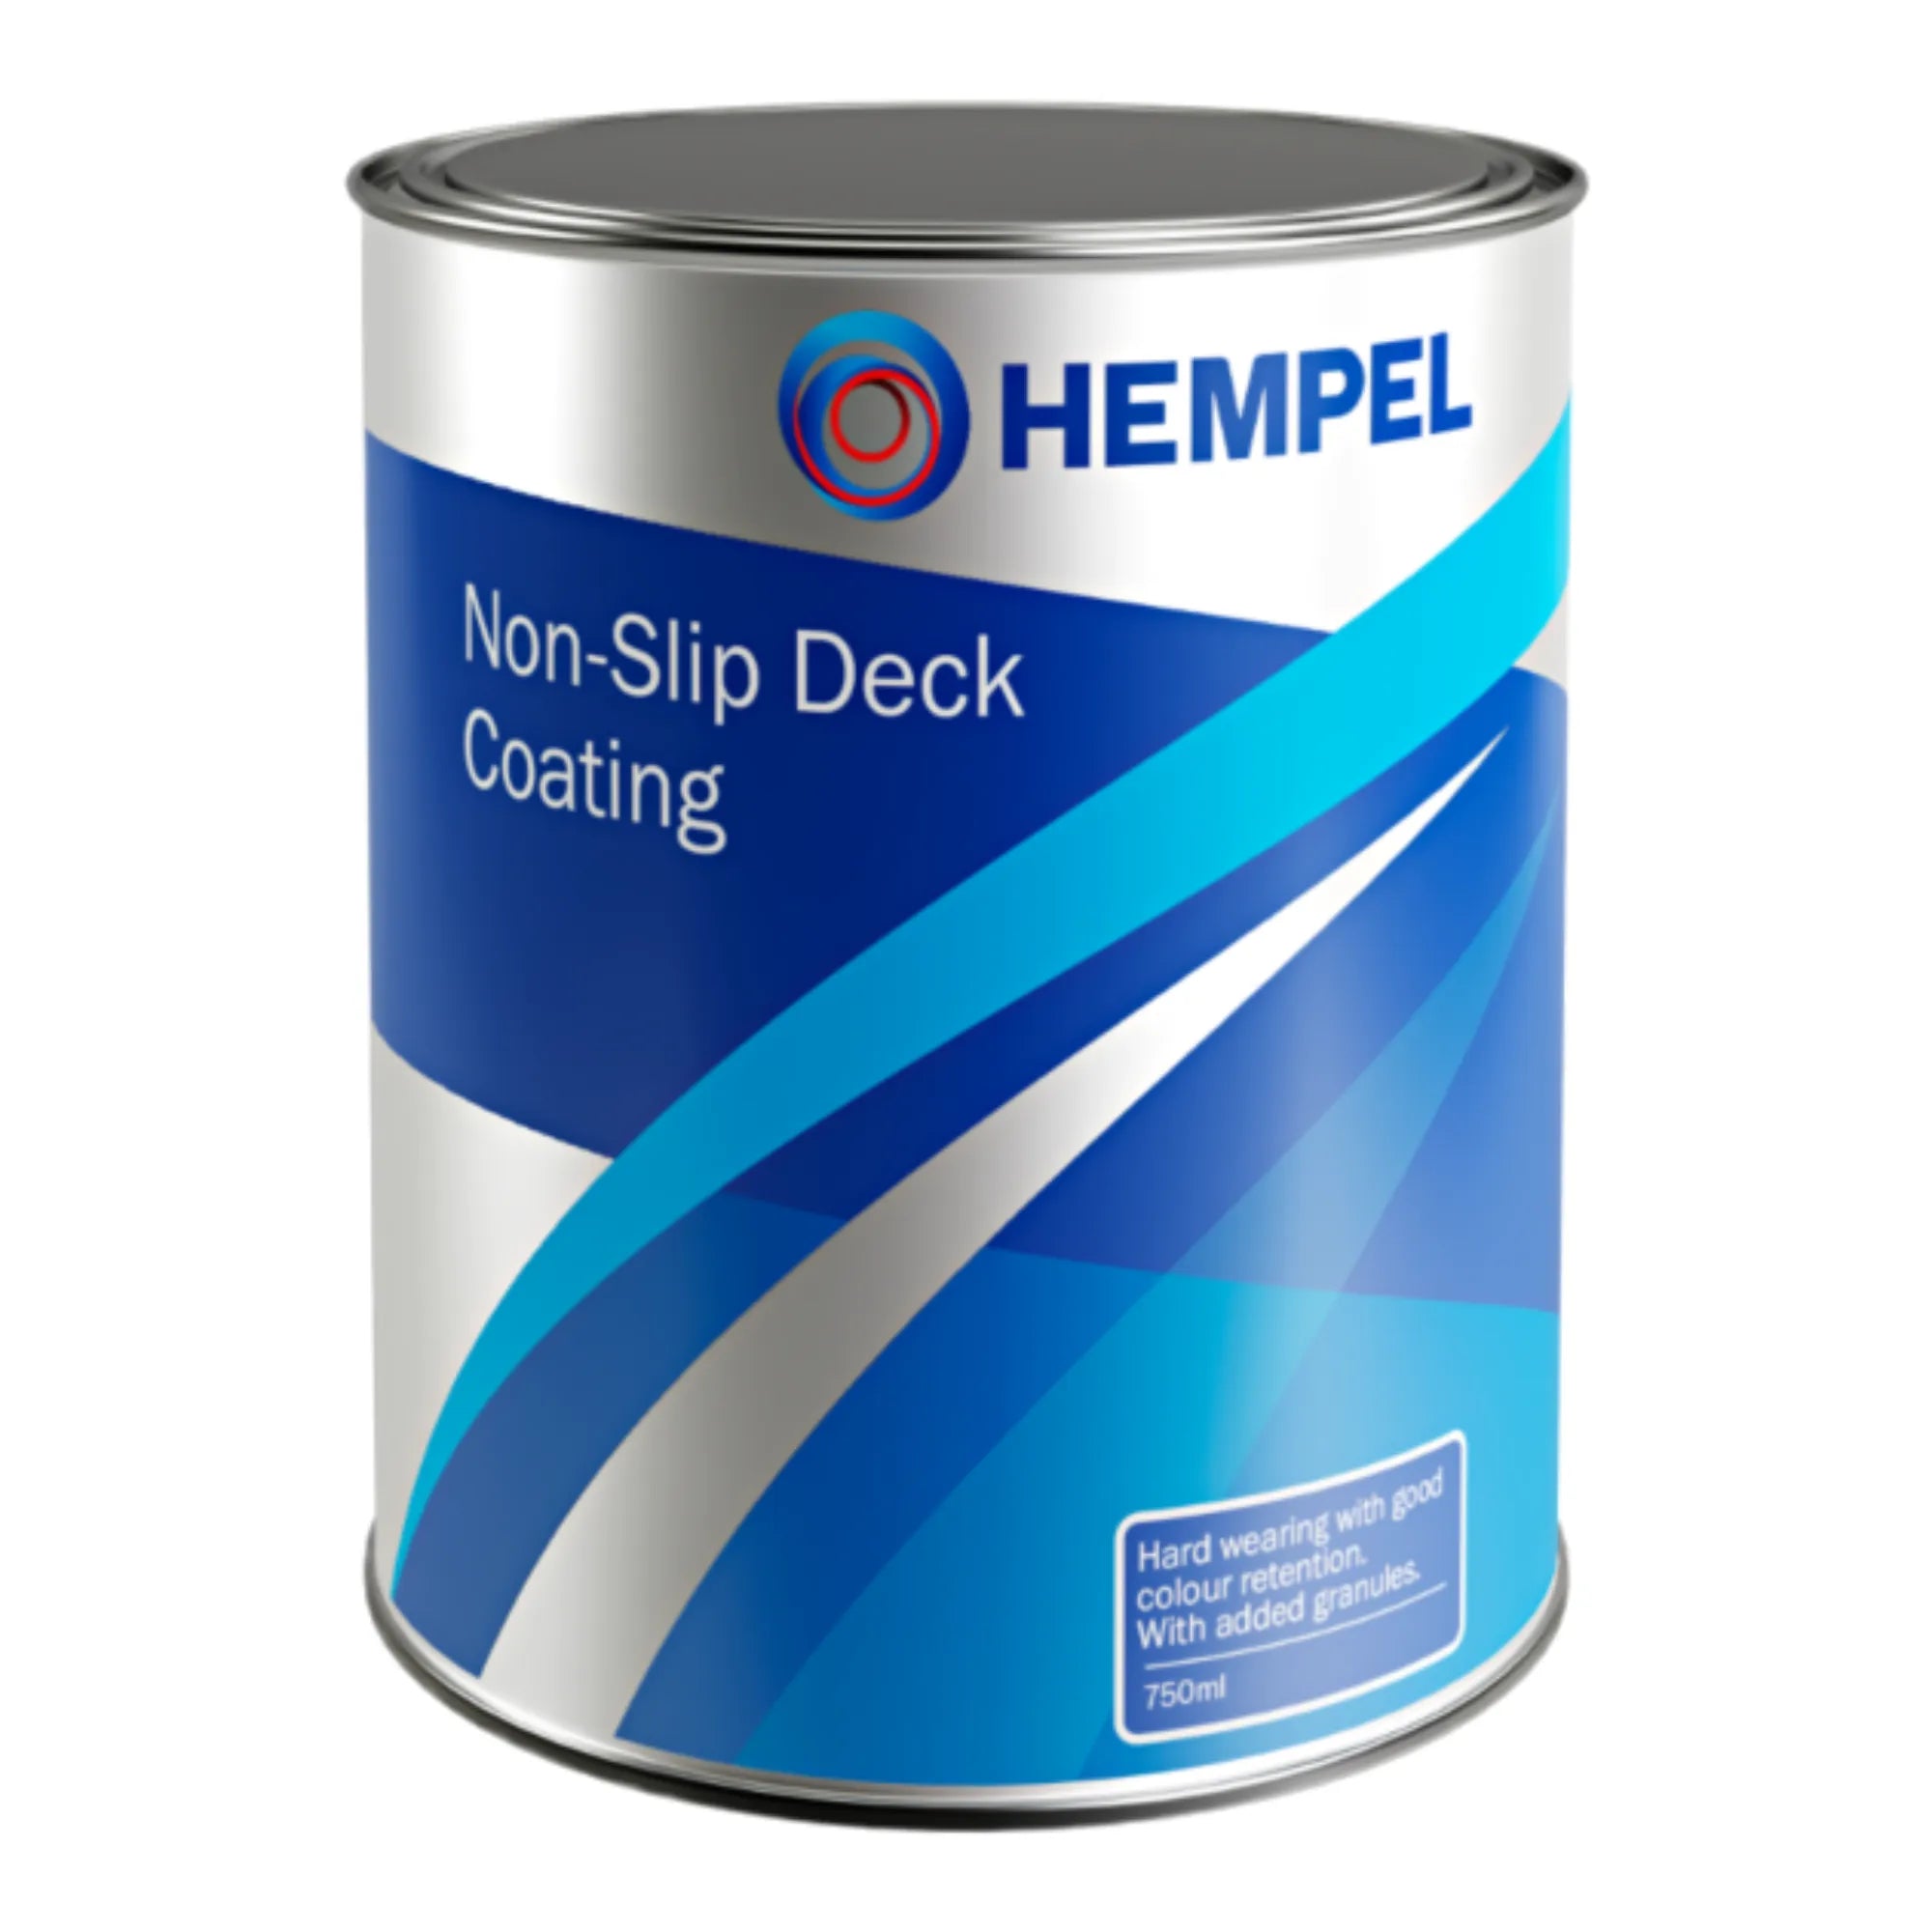 Non-Slip Deck Coating